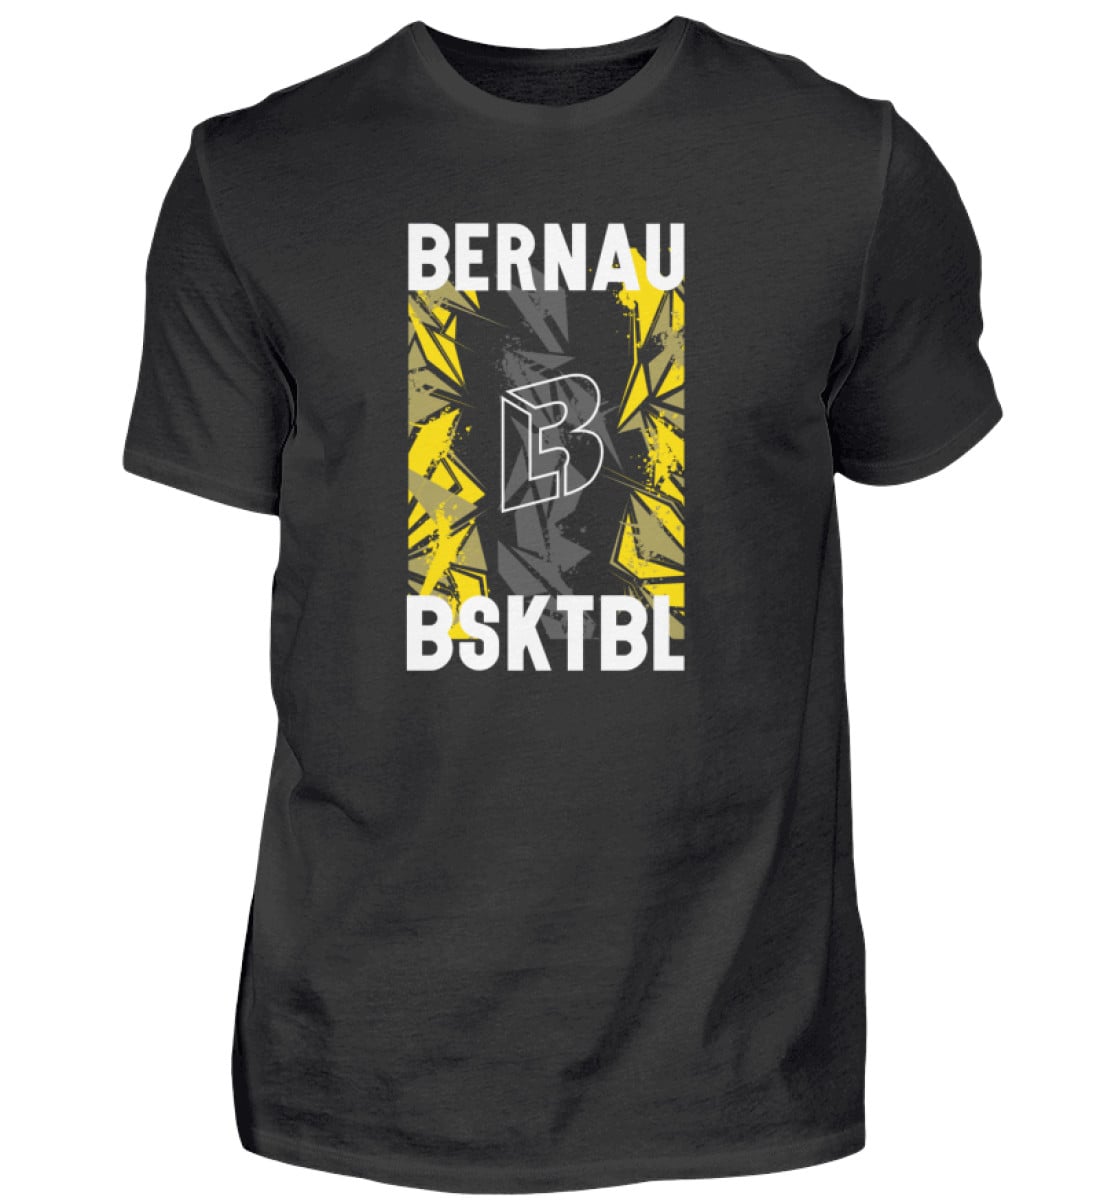 Bernau Bsktbl - Herren Premiumshirt-16